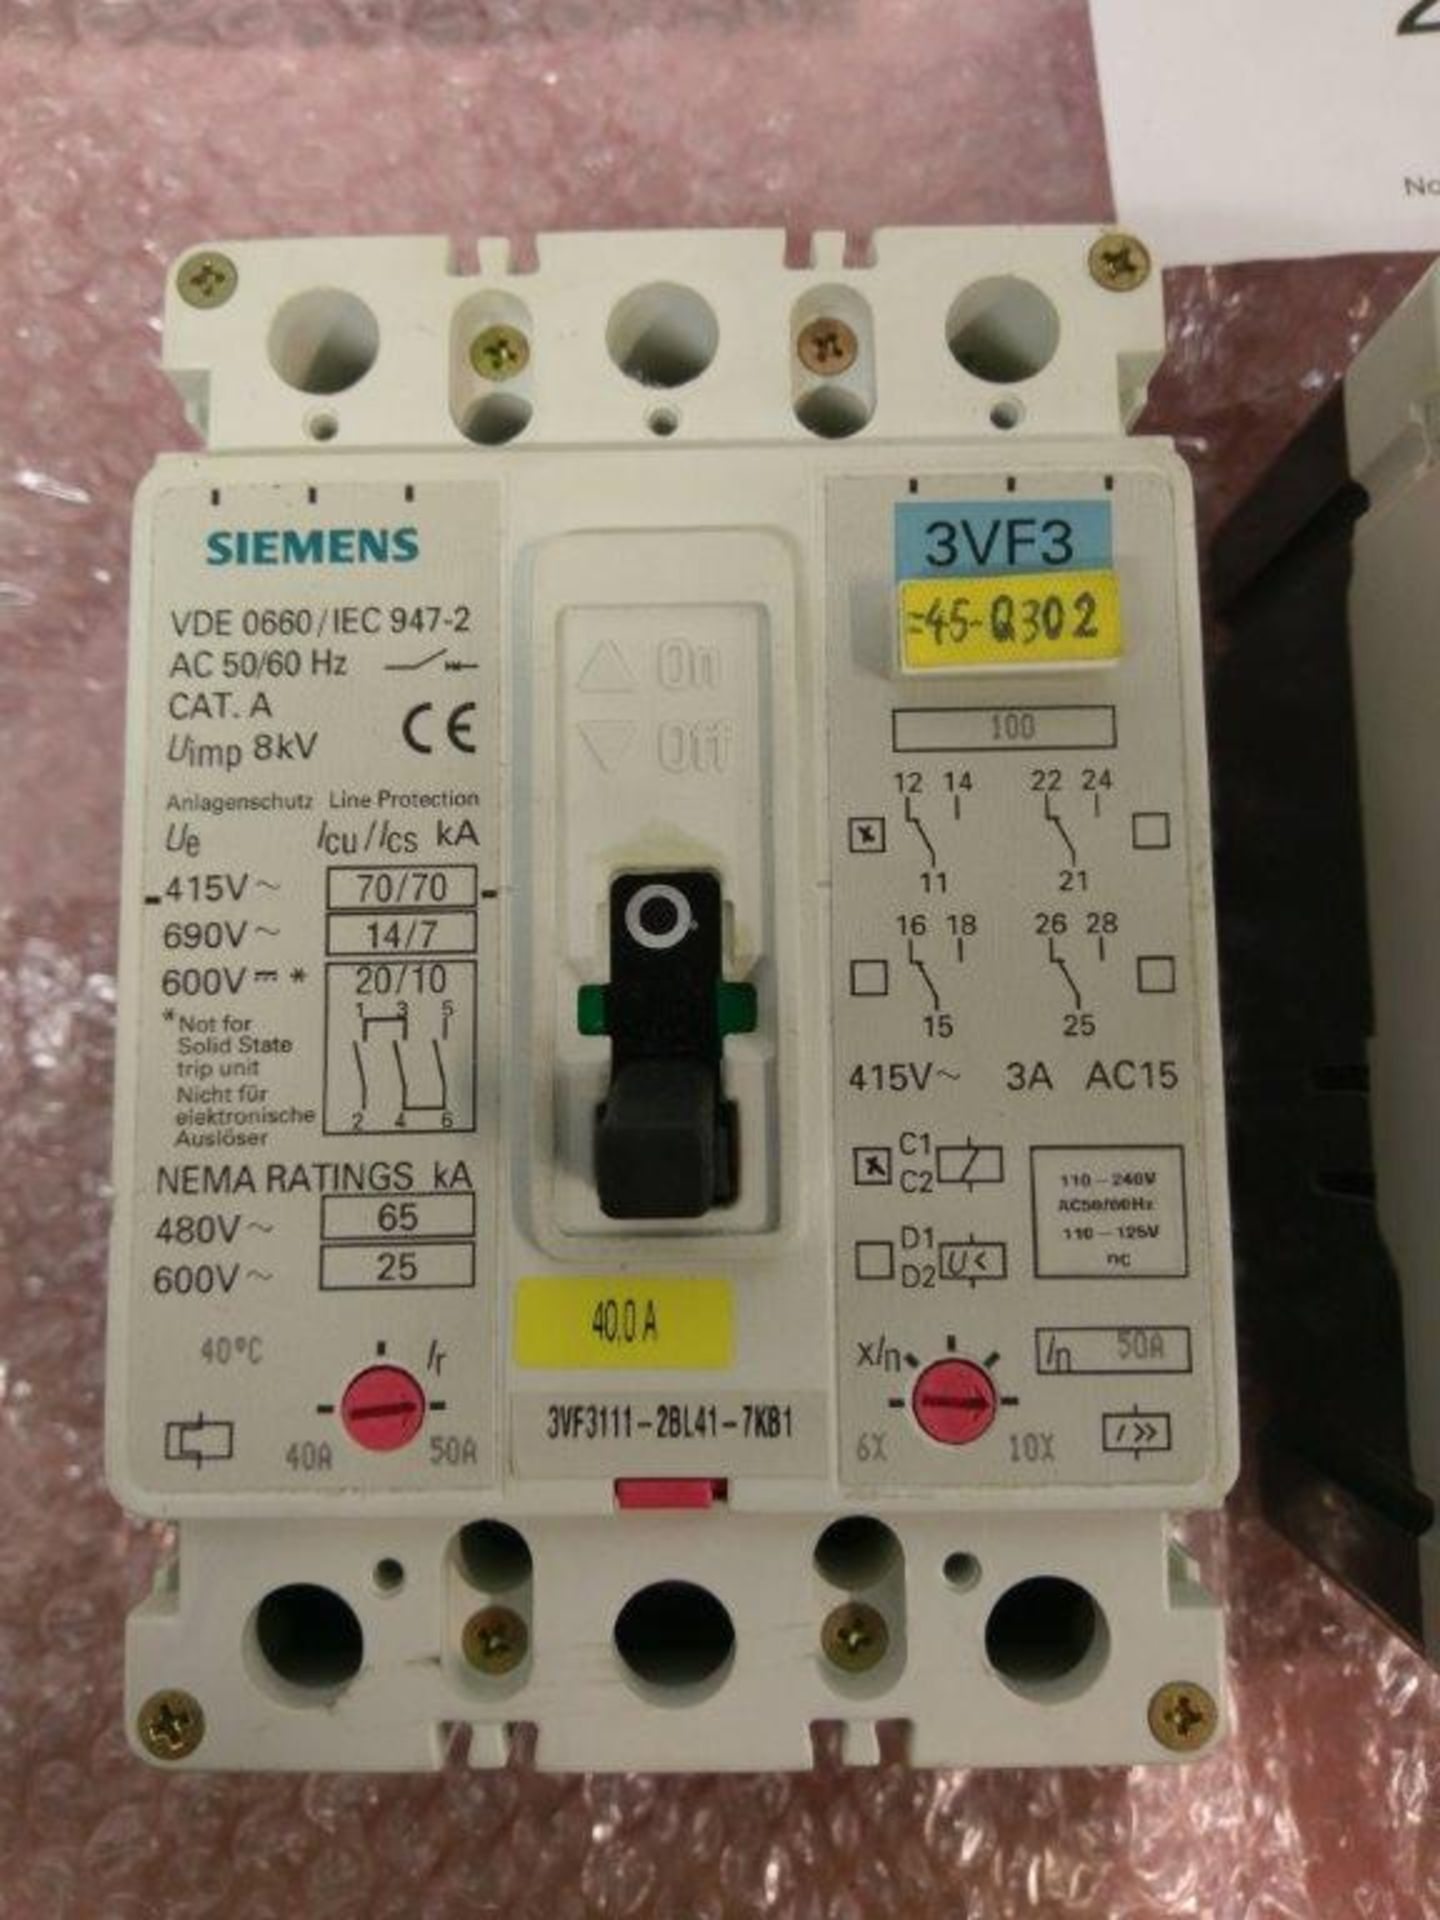 Lot of 3 Siemens Circuit Breaker Model 3VF3211-2BU41-7KB1 (2) 40.0 A & (1) 120.0 A - Image 2 of 4